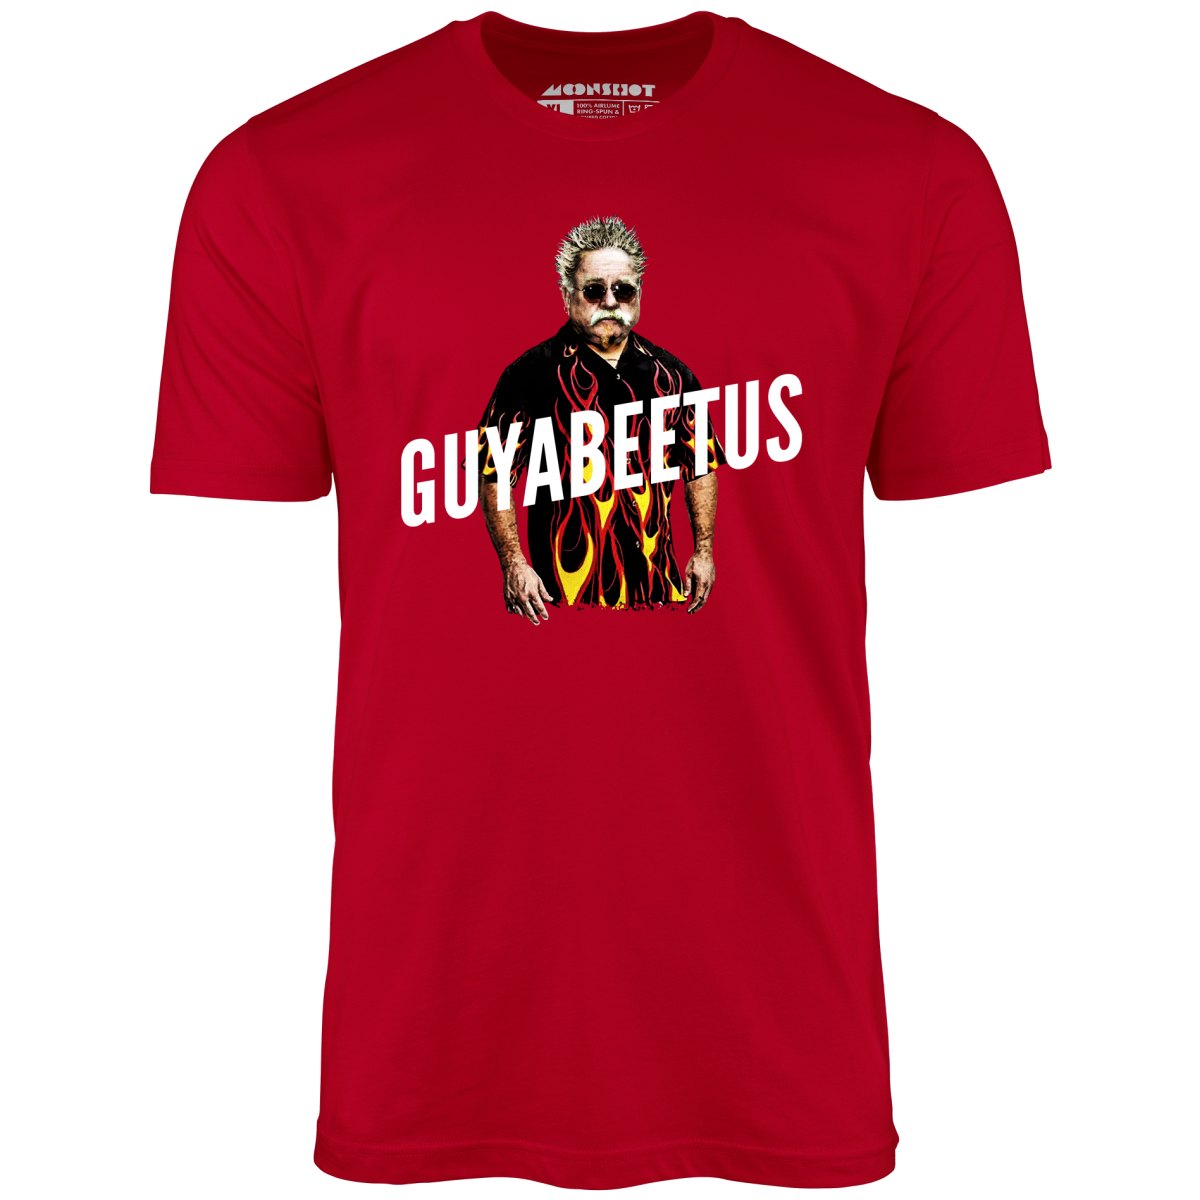 Guyabeetus - Unisex T-Shirt